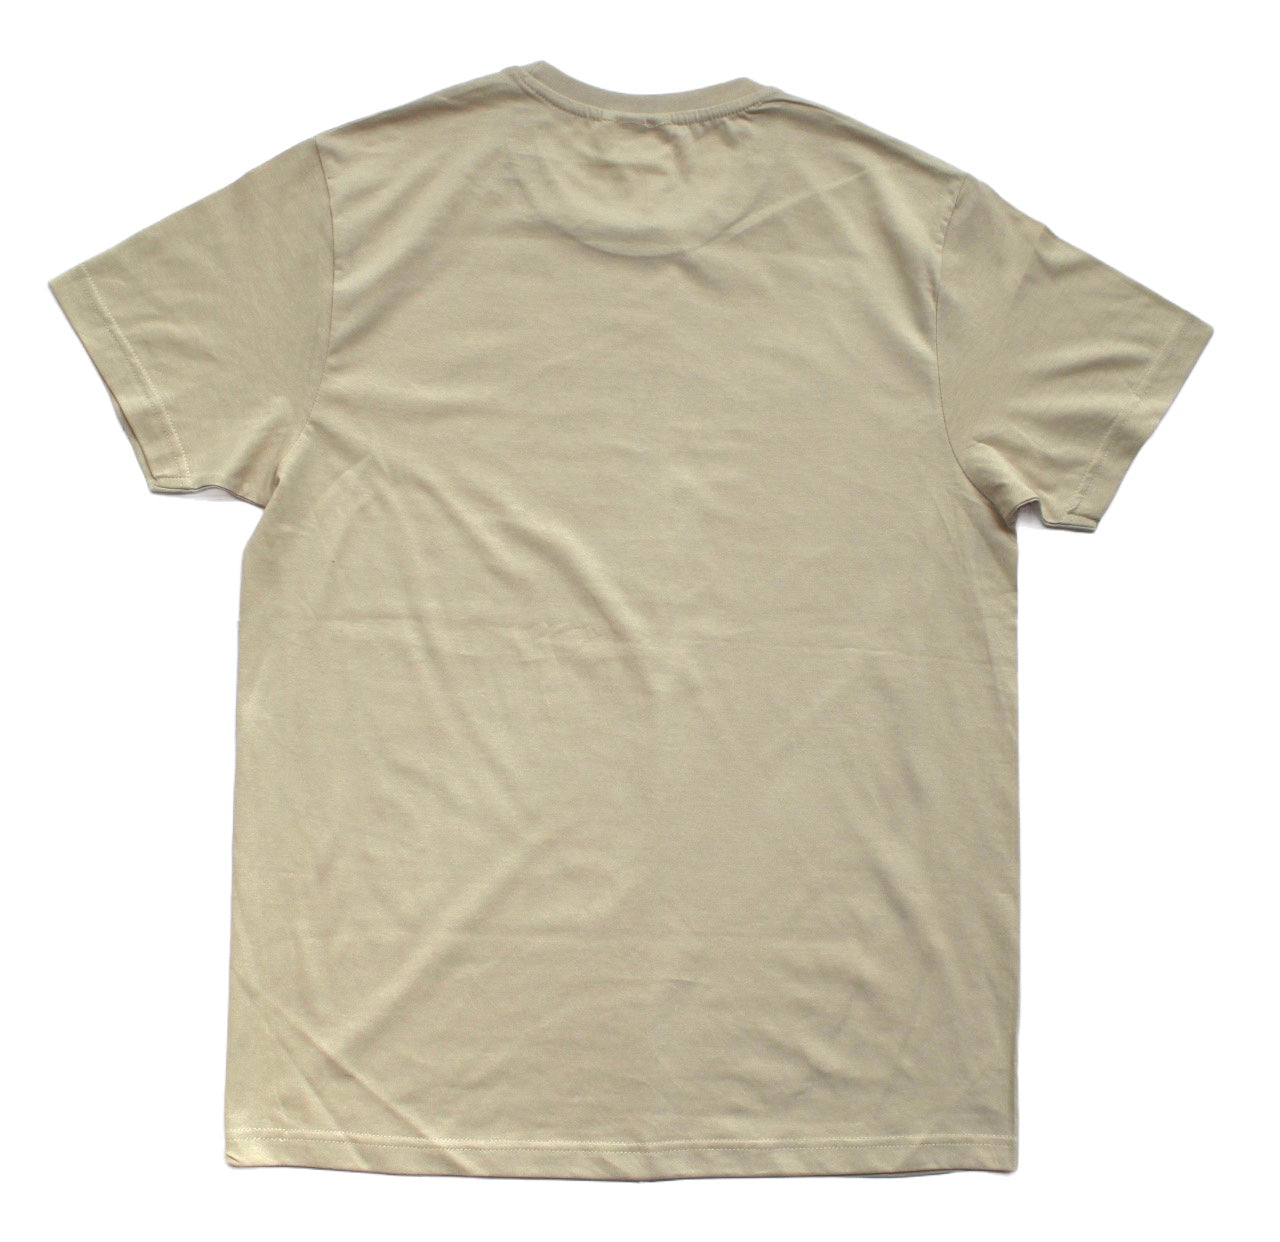 The Jordaan Unisex T-shirt, Canvas